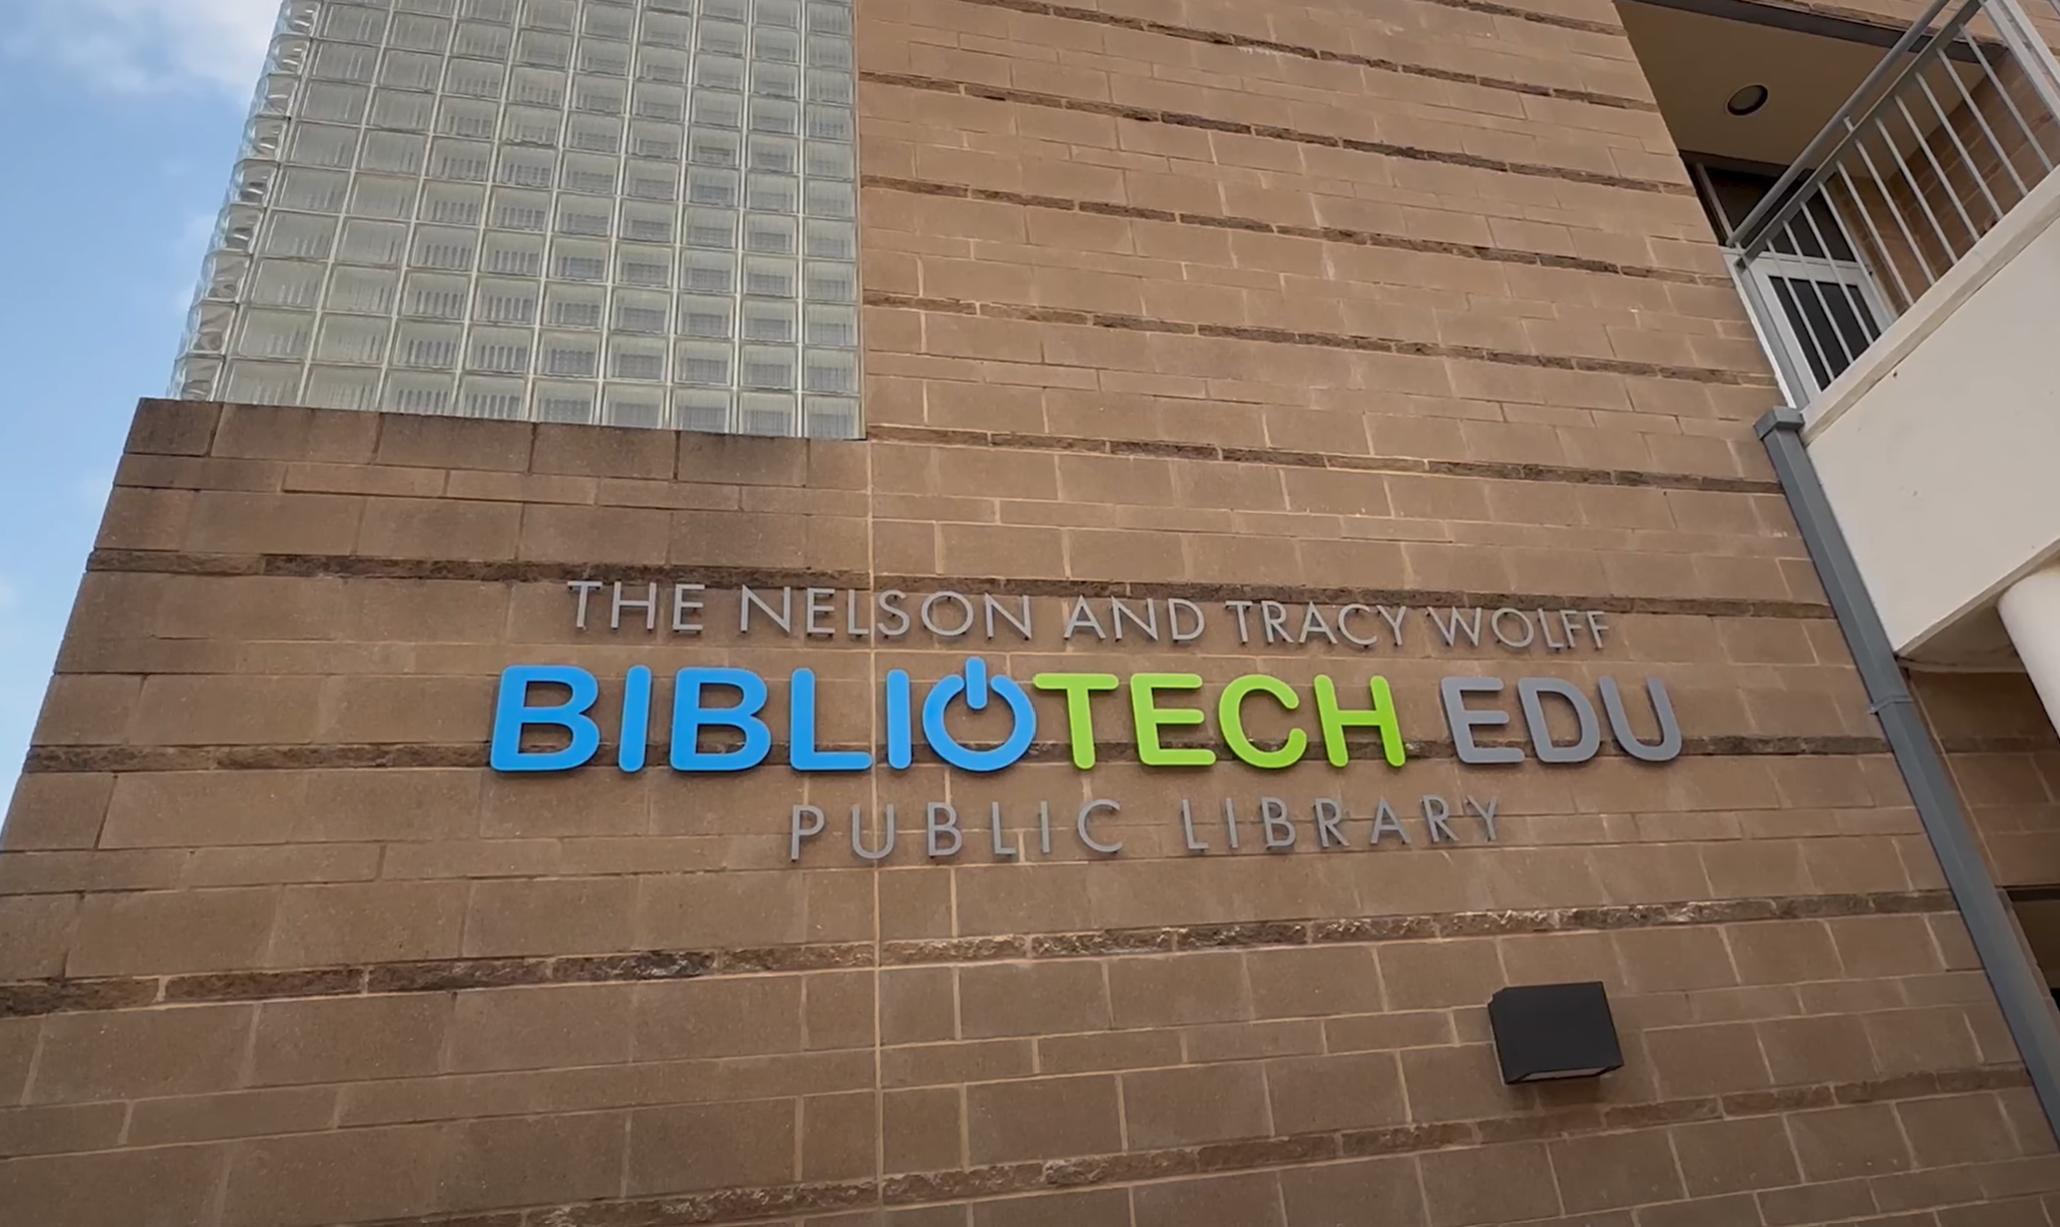 BiblioTech EDU sign